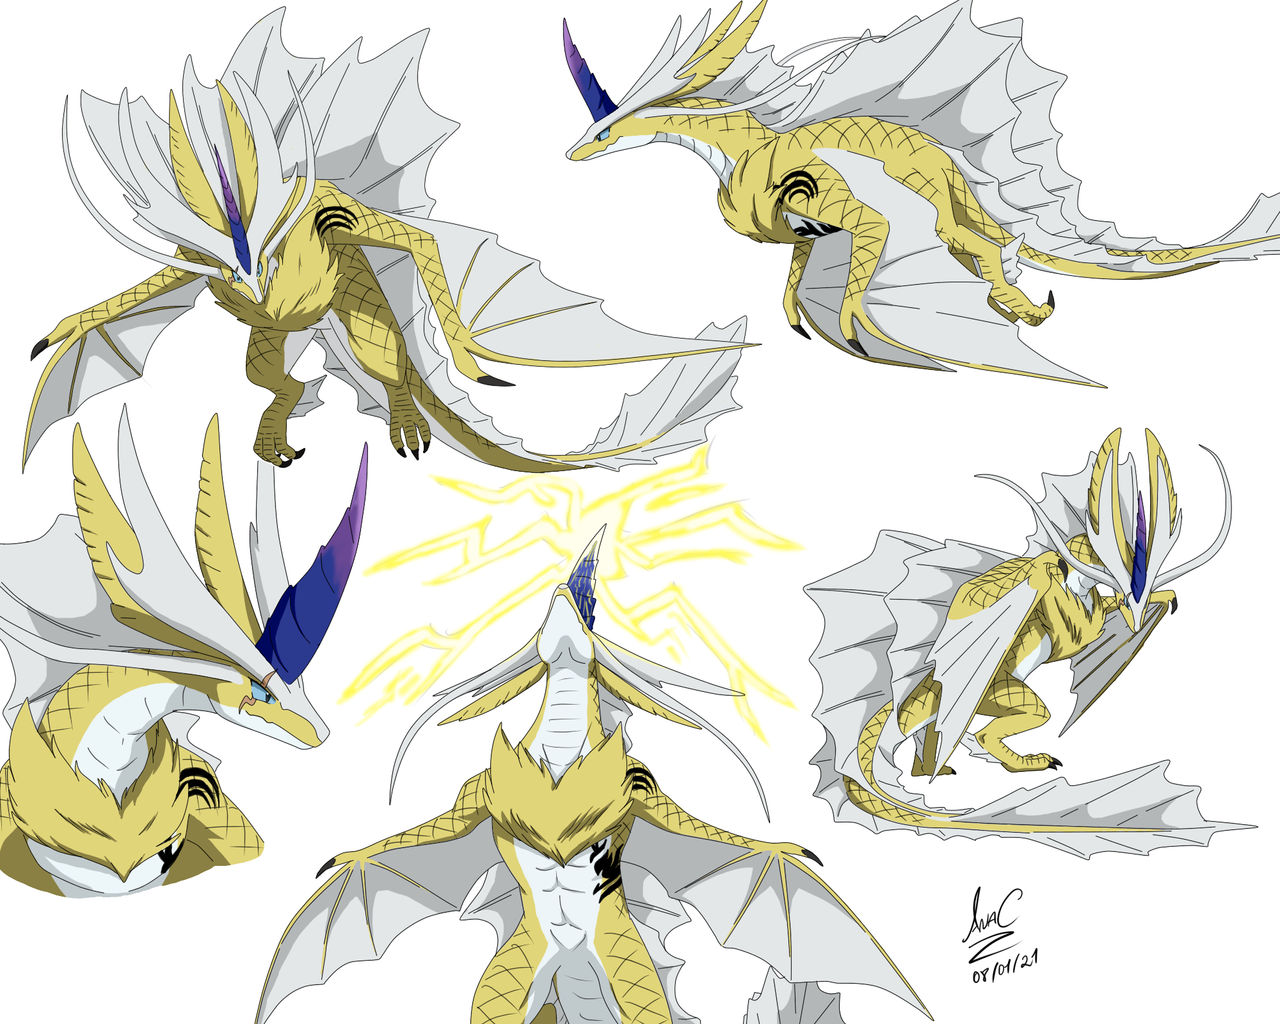 Natsu END dragon form by LightFury96 on DeviantArt